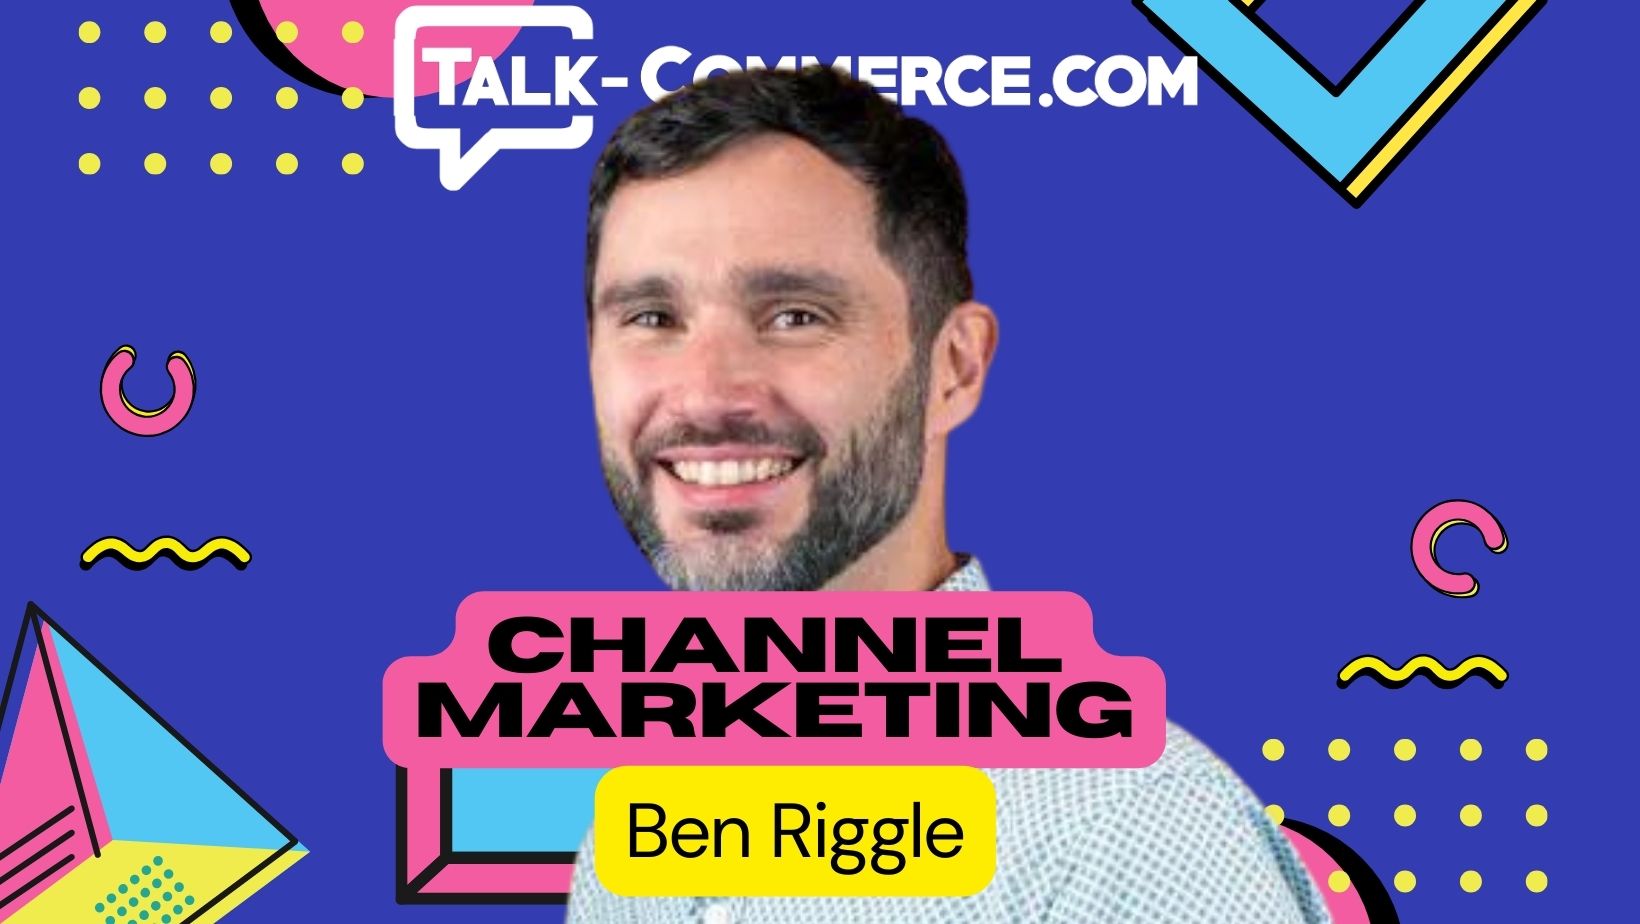 Talk Commerce - Ben Riggle